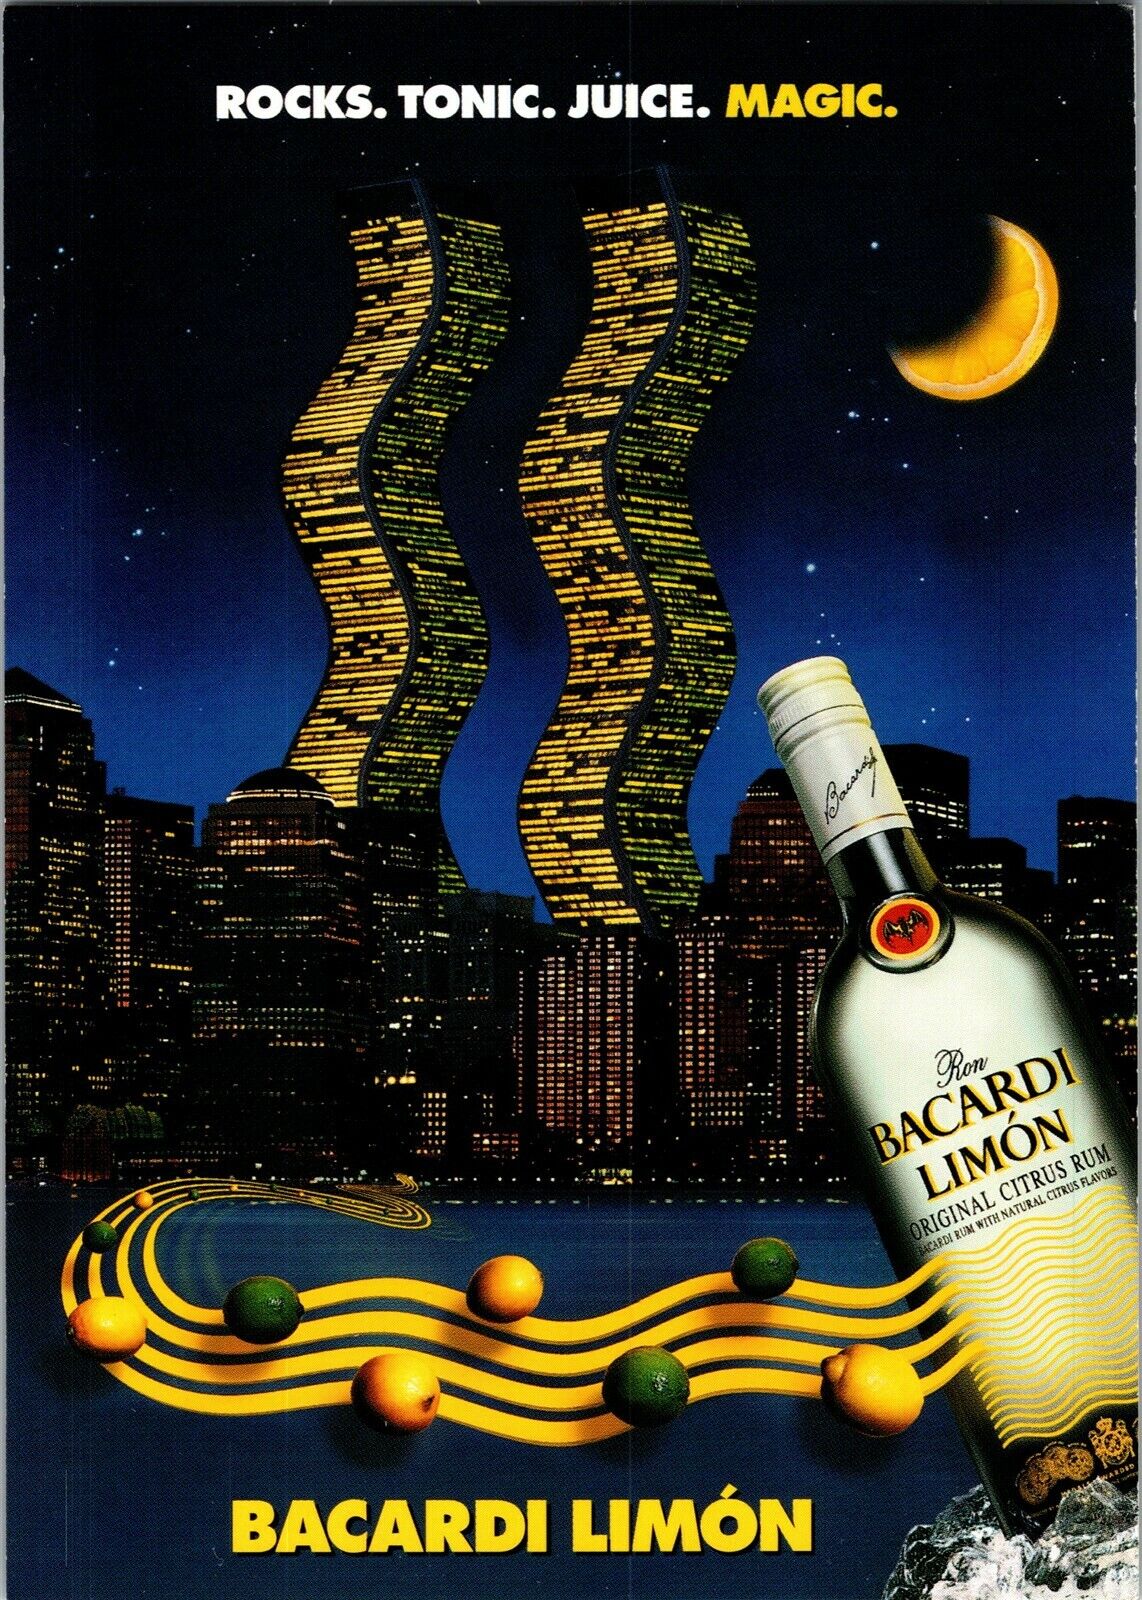 Advertising Bacardi Limon Citrus Rum Postcard I68